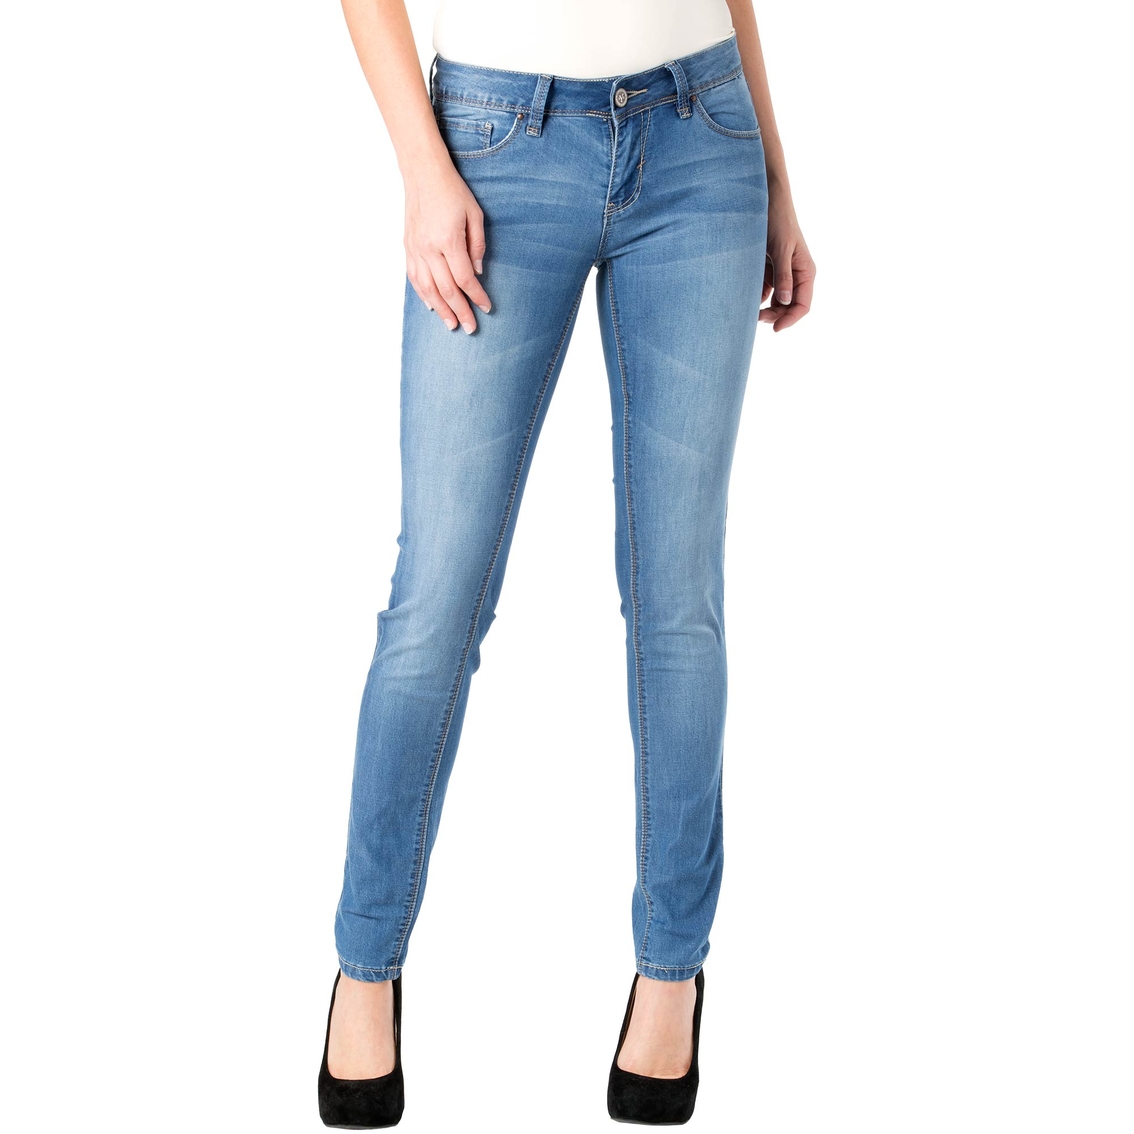 Ymi Juniors Skinny Five Pocket Jeans | Jeans | Apparel | Shop The Exchange